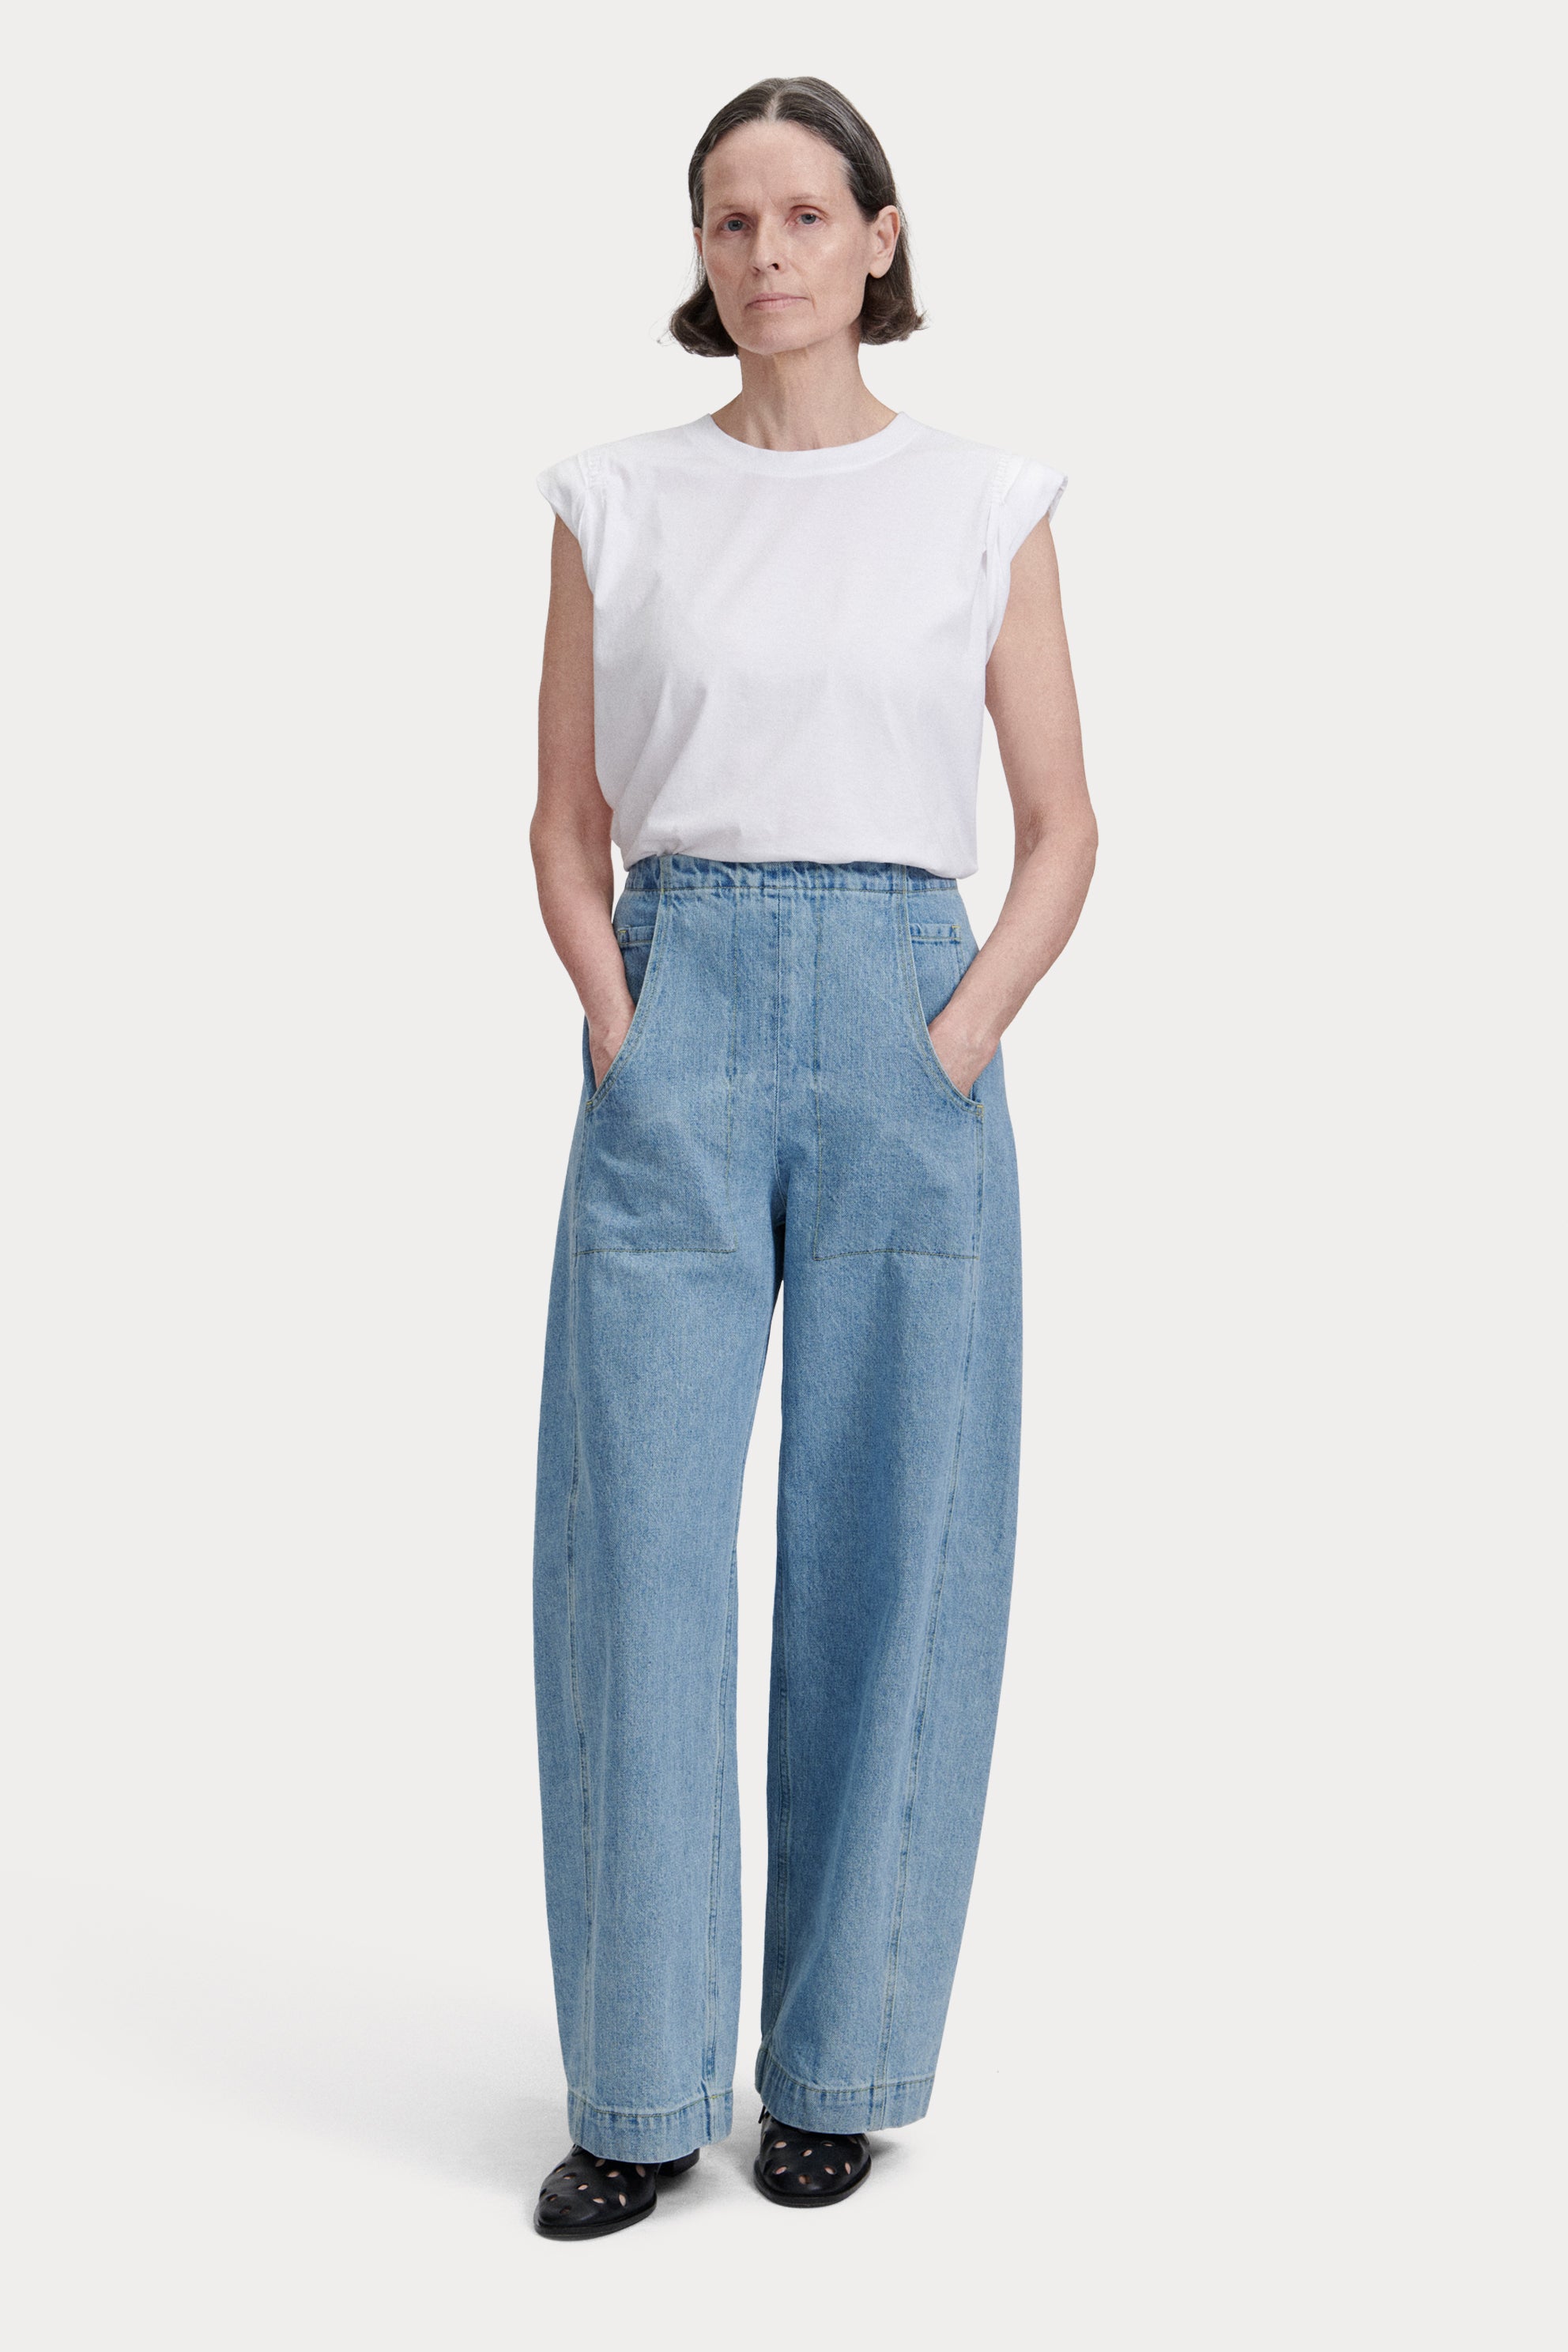 Denim and Jeans | Rachel Comey